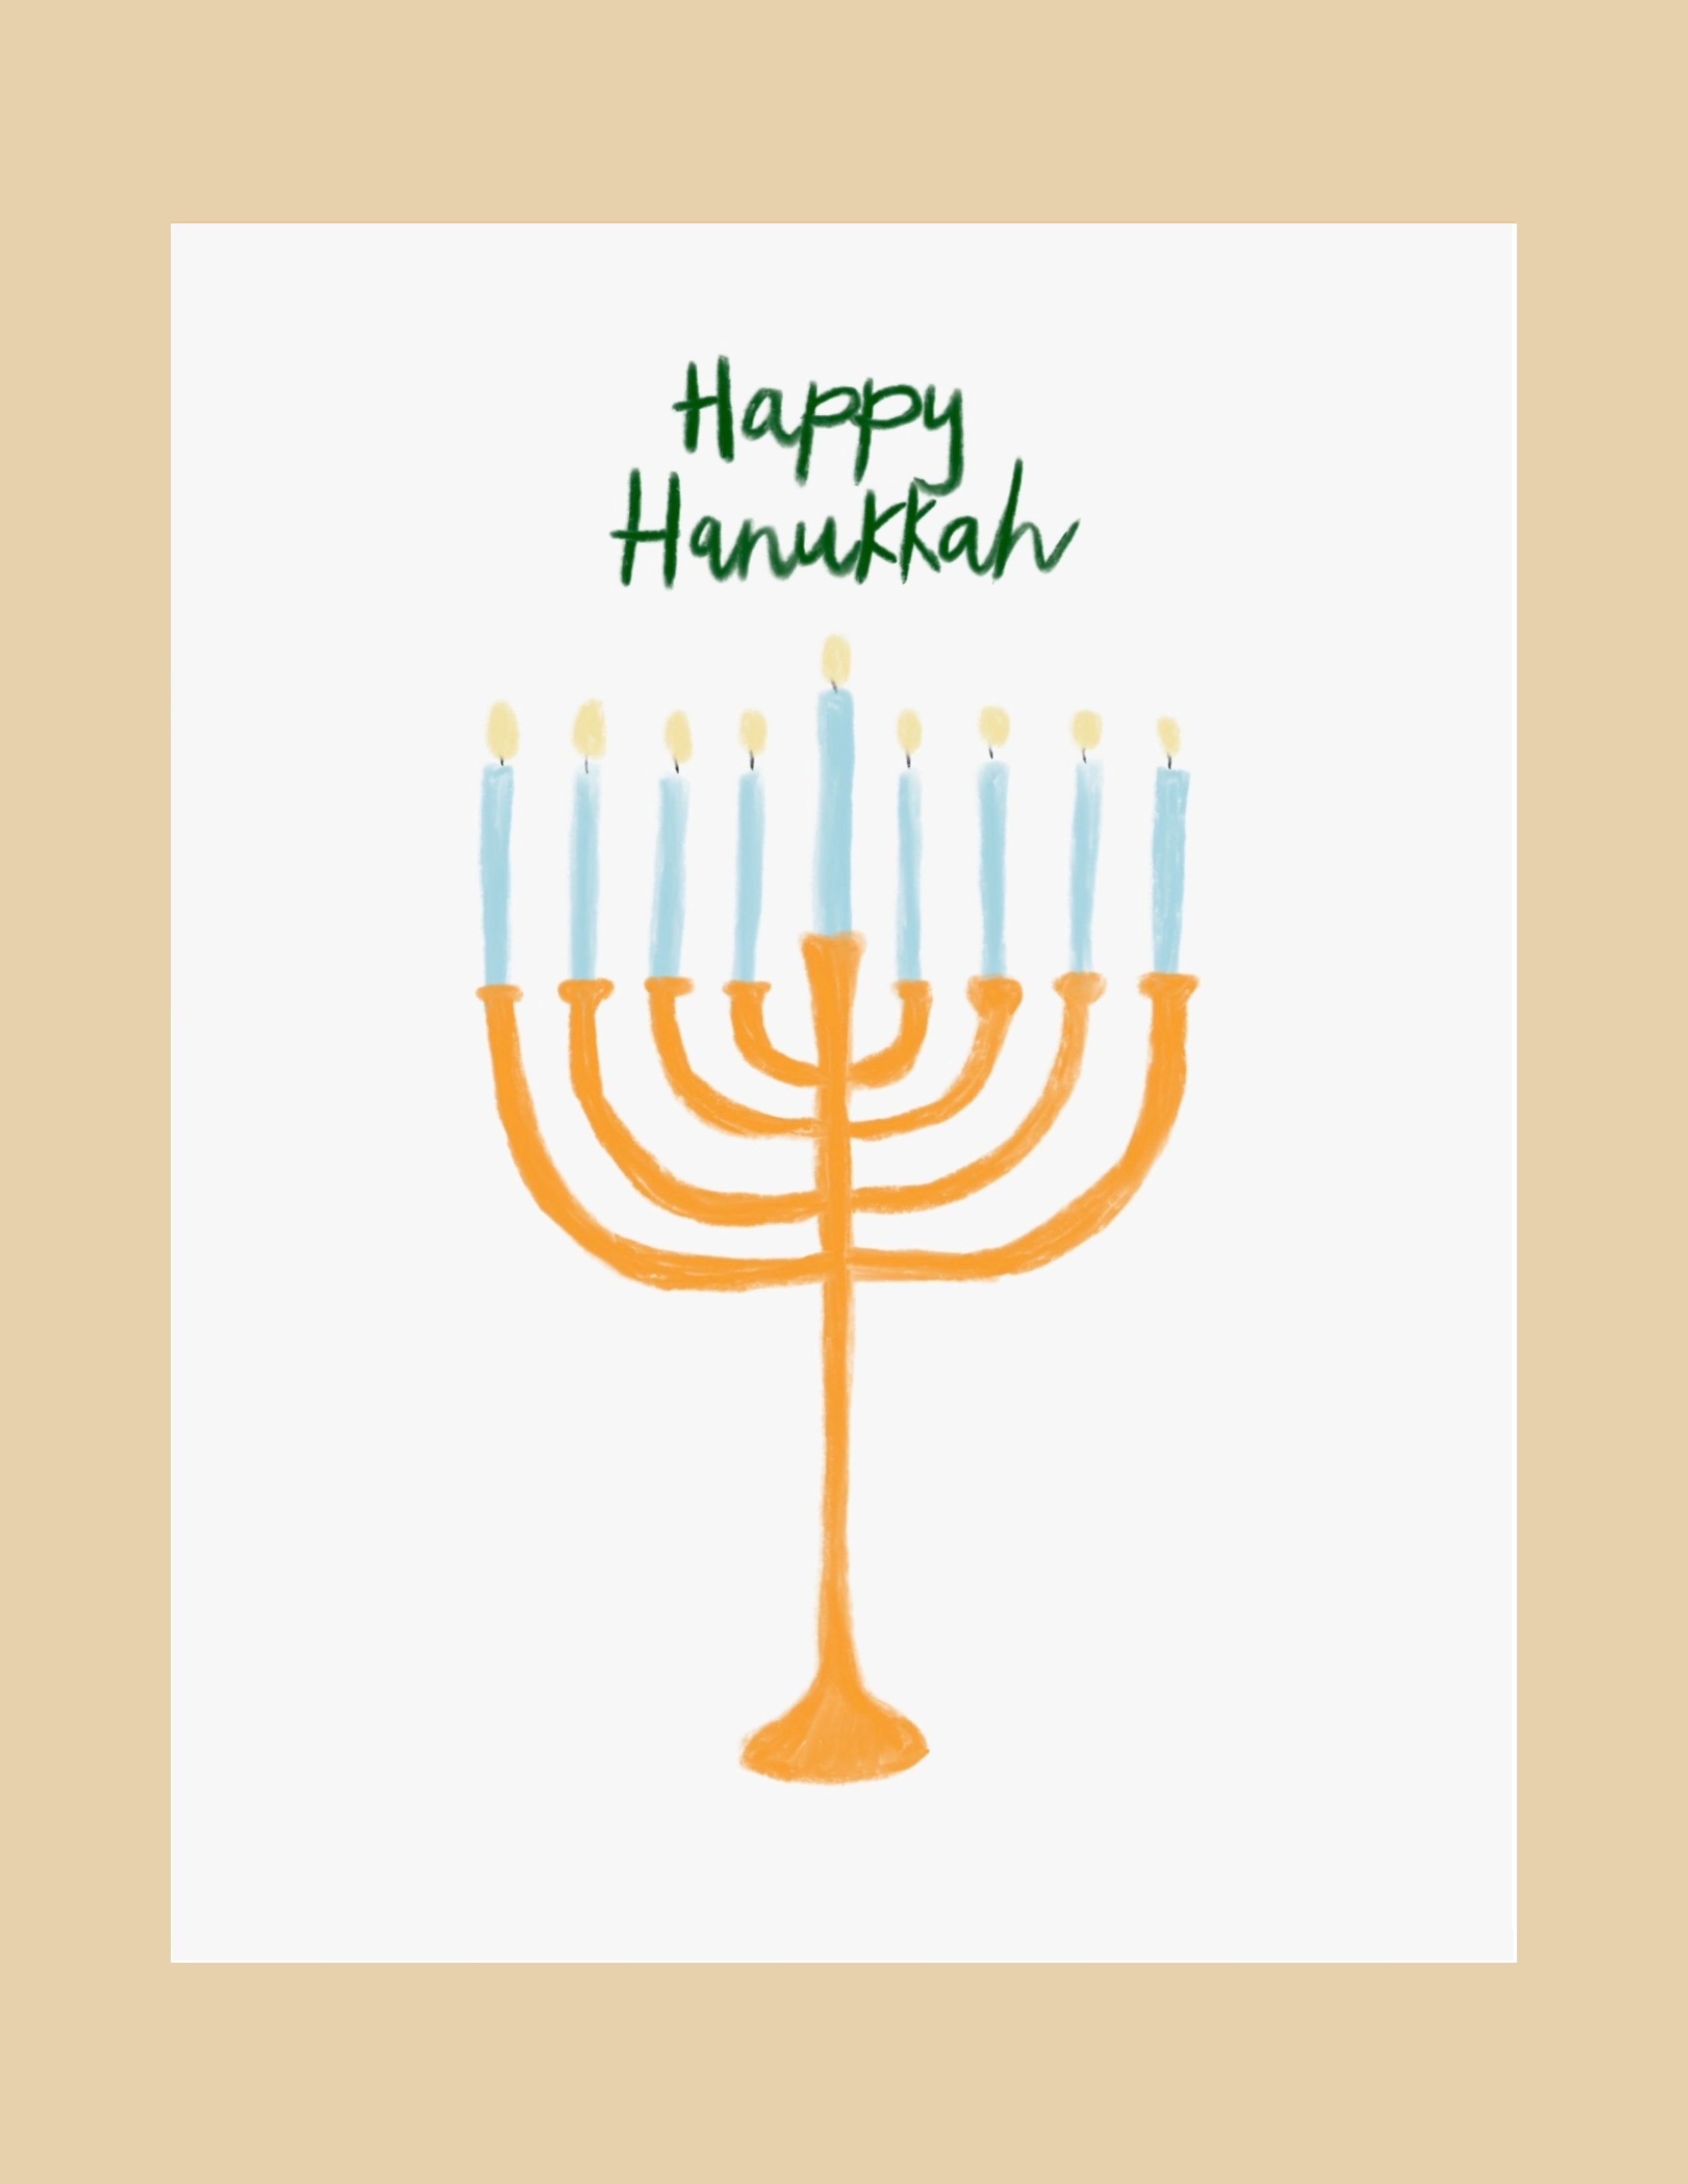 Greeting Cards - Happy Hanukkah